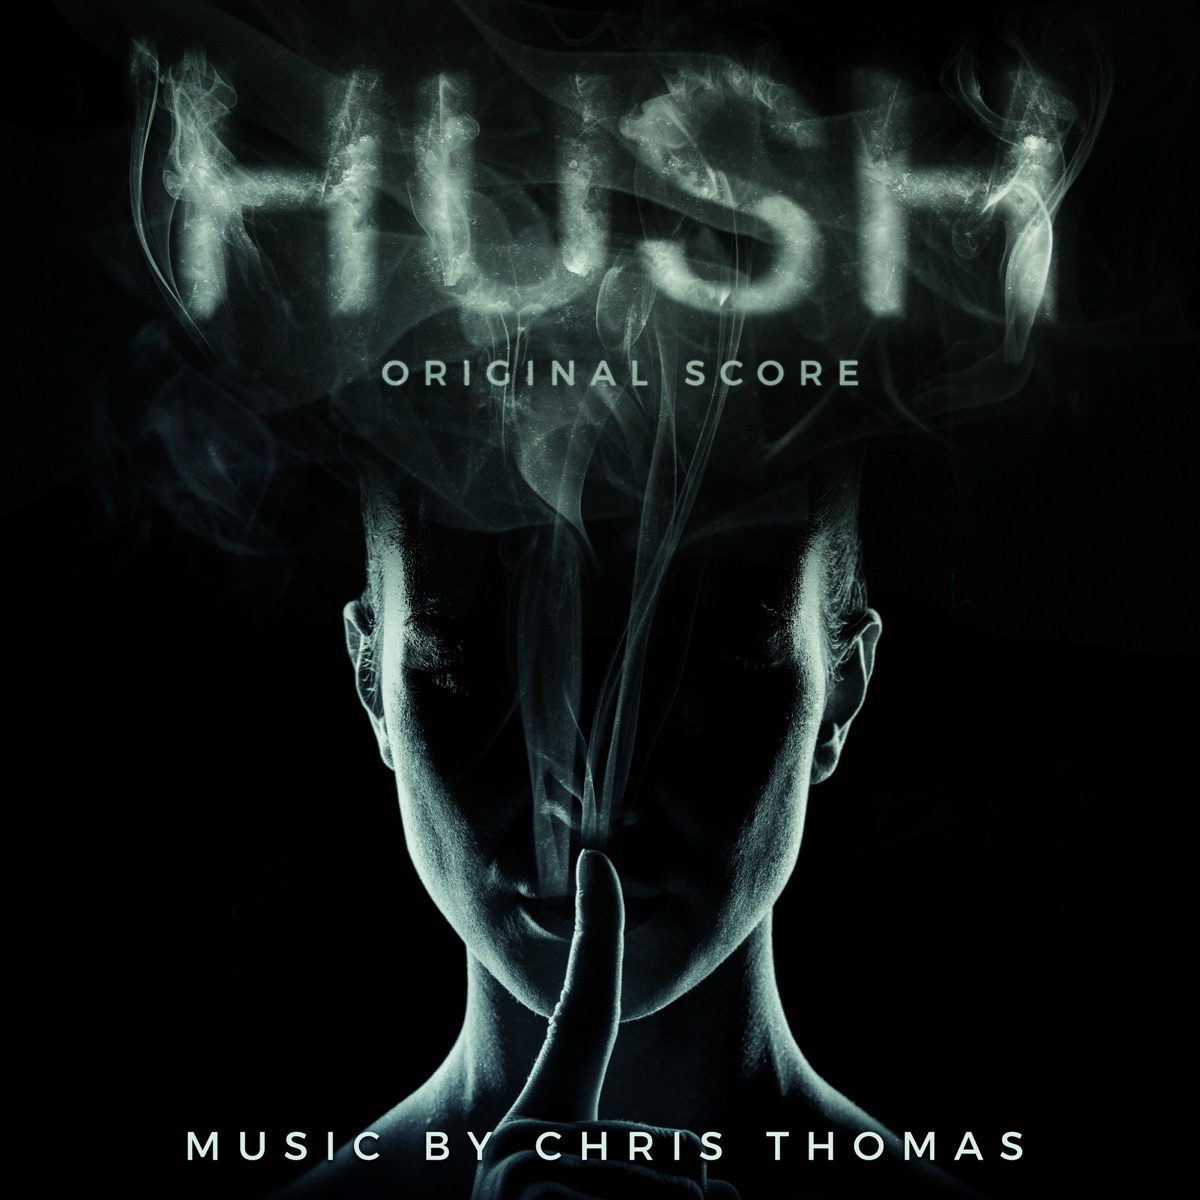 Hush Hush download the last version for apple